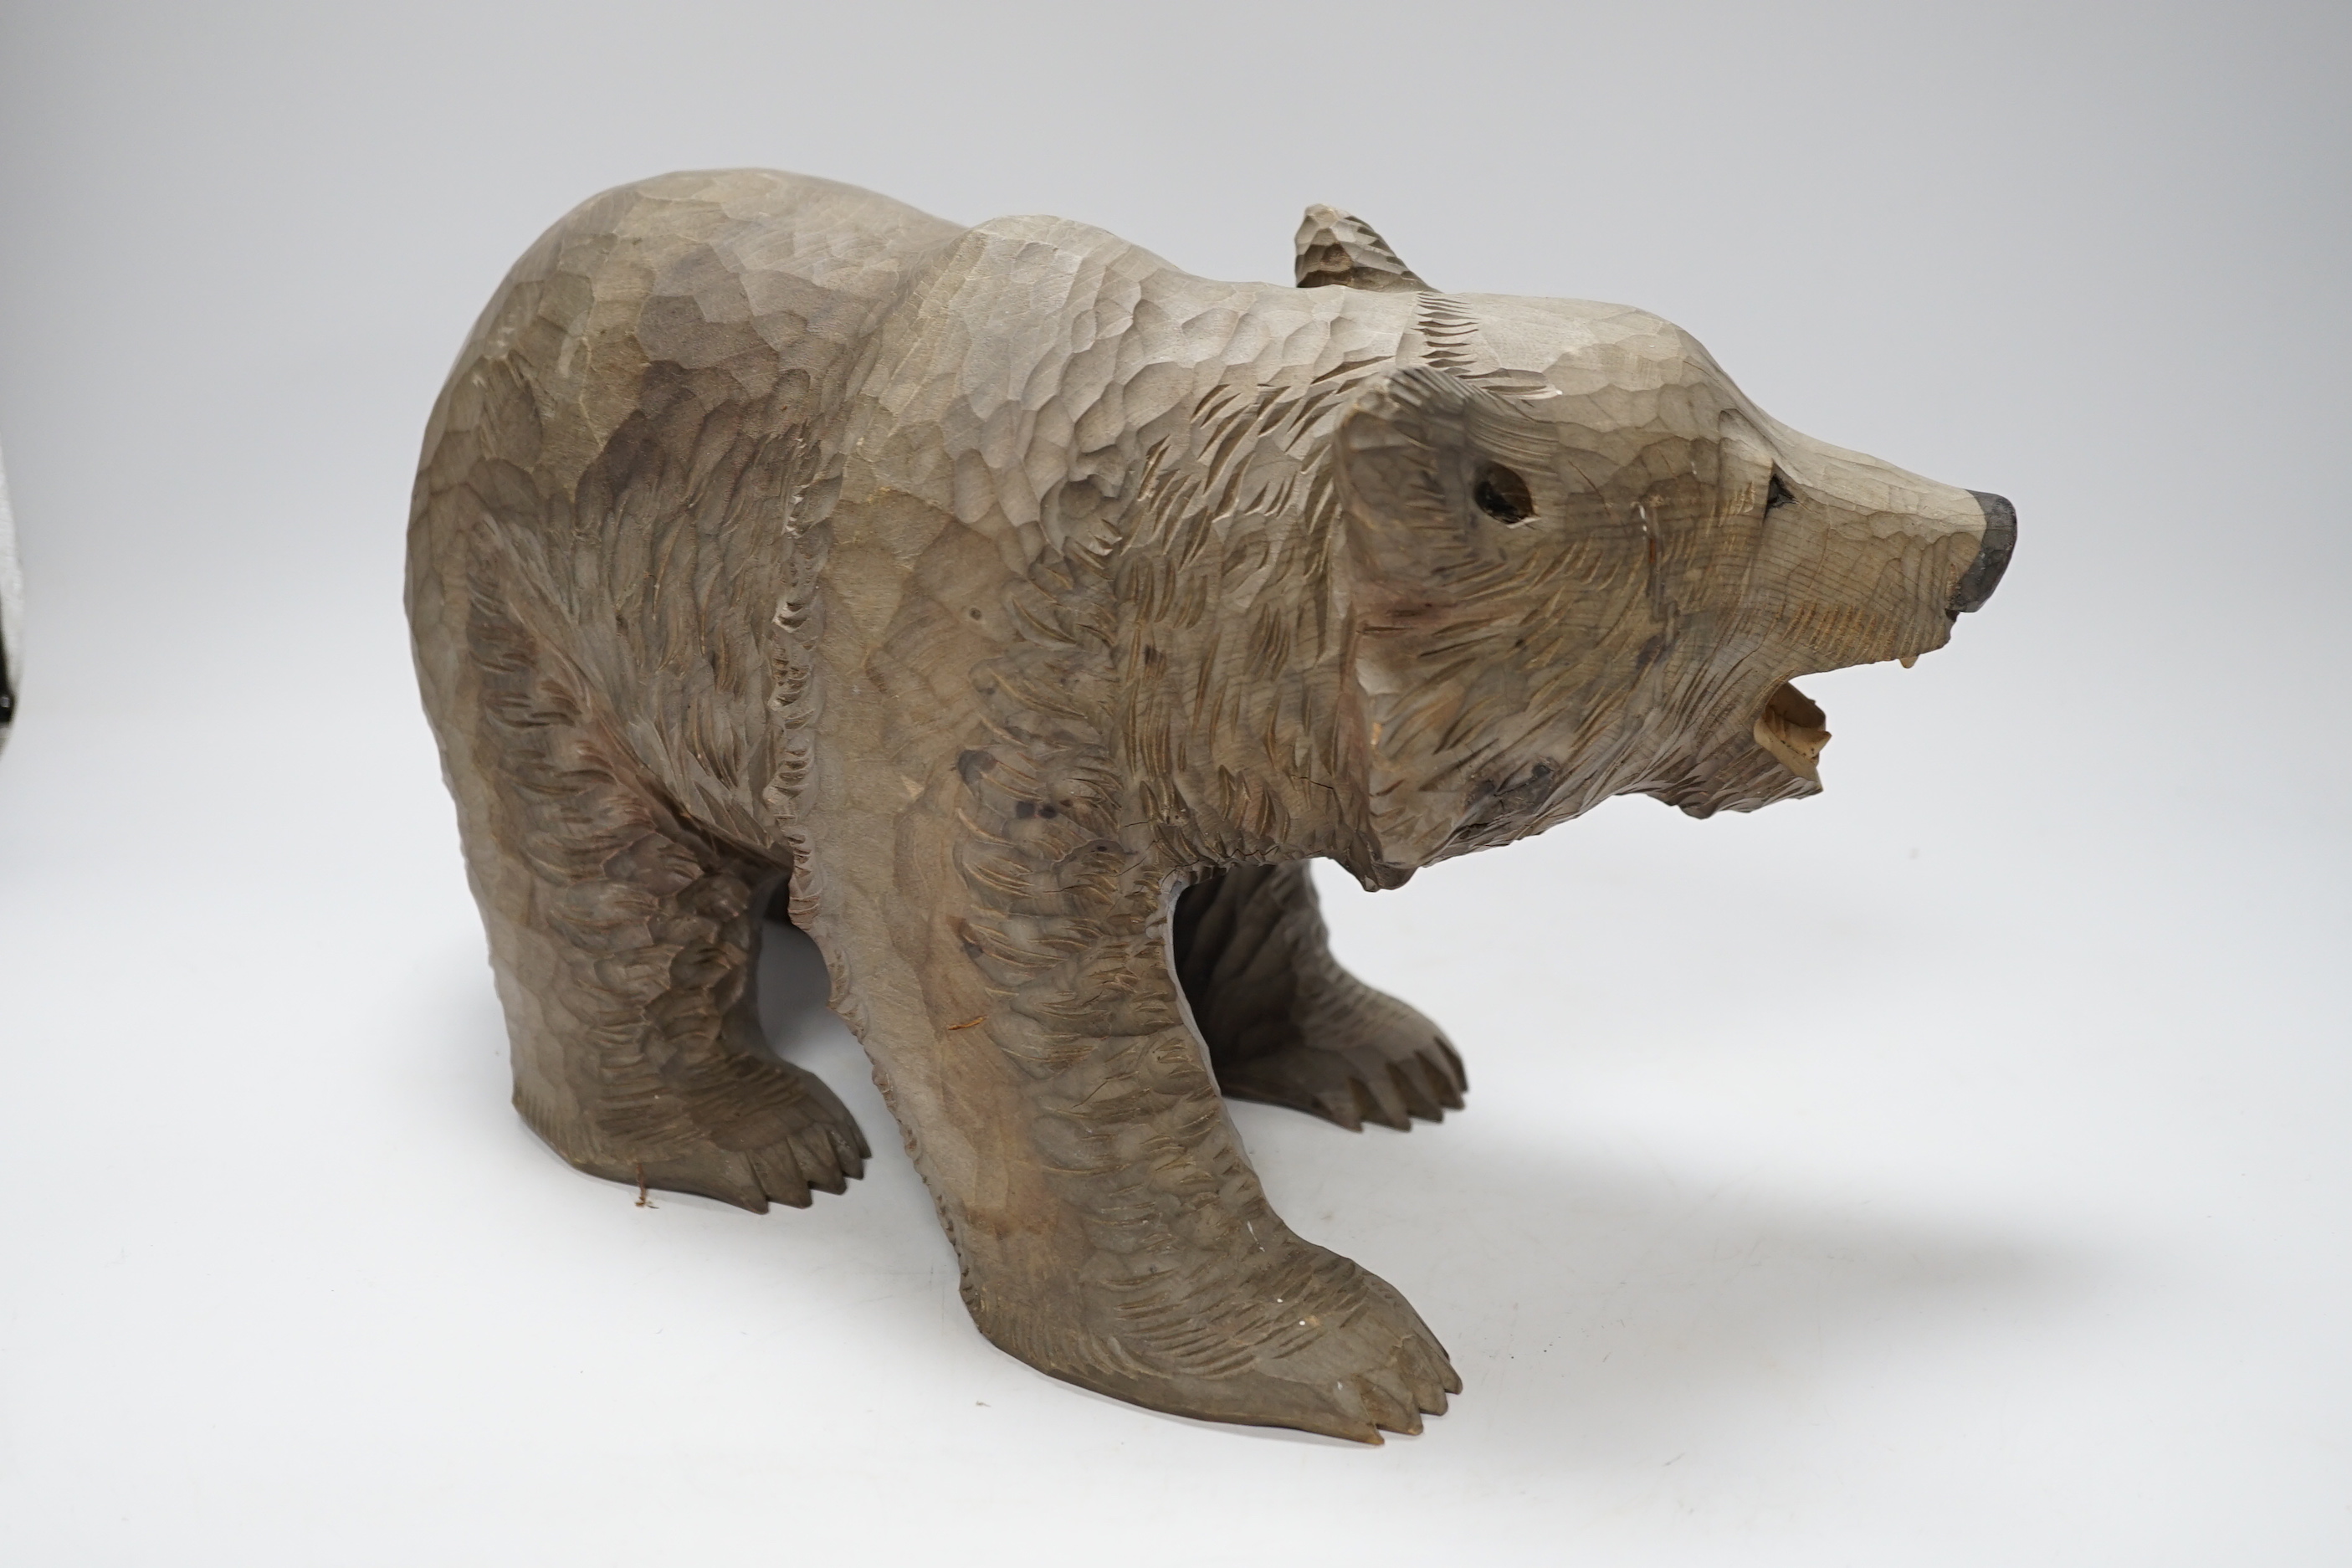 A Japanese carved wood bear, 32cm long